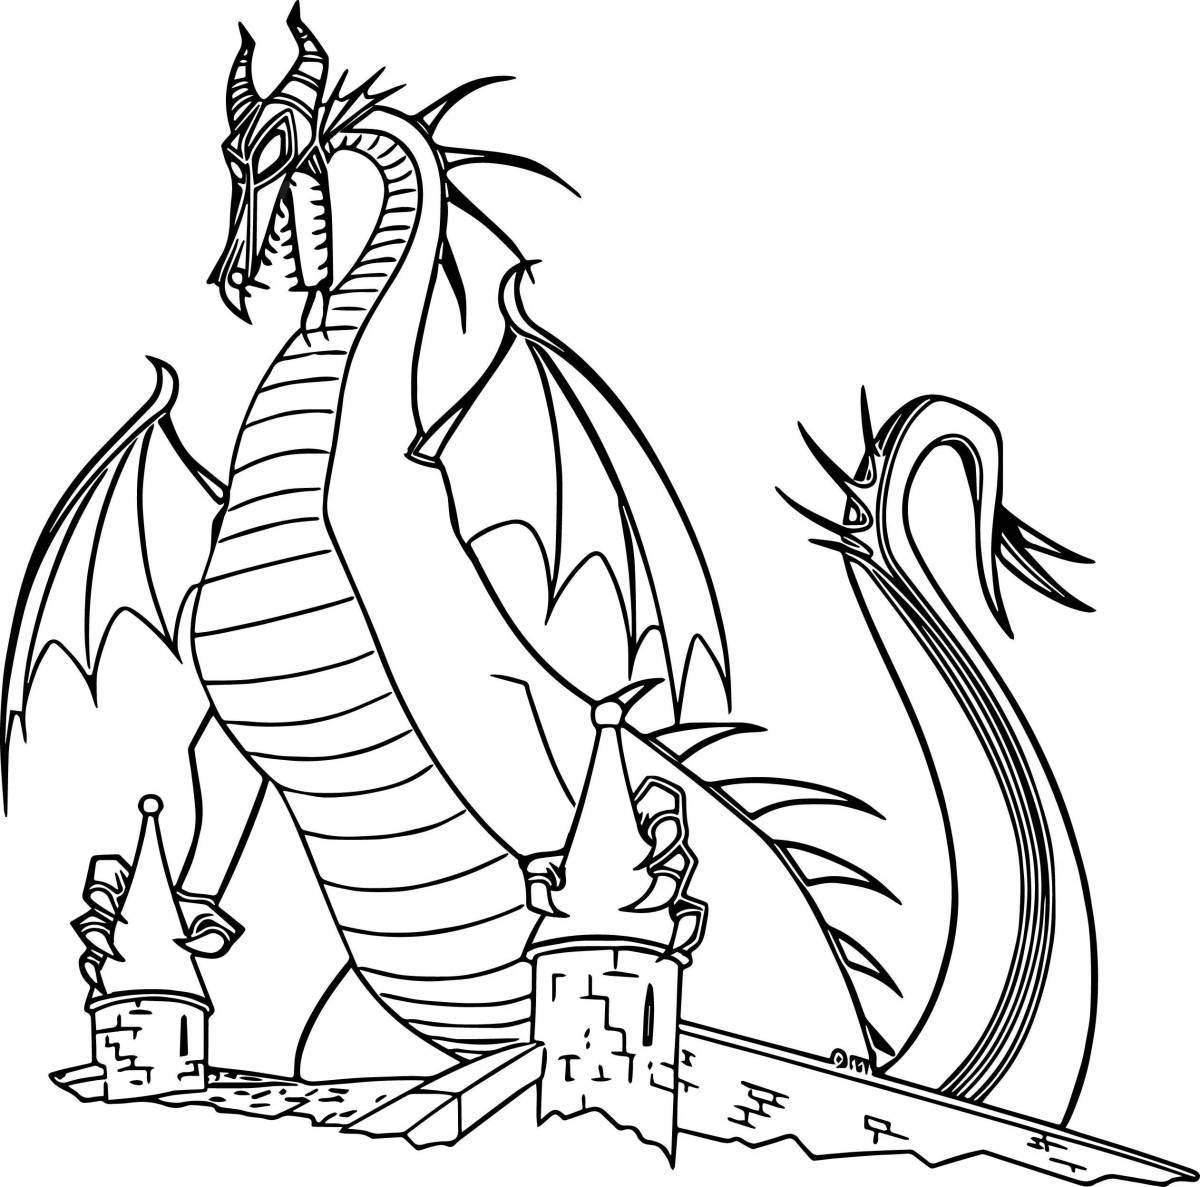 Fun coloring dragons for boys